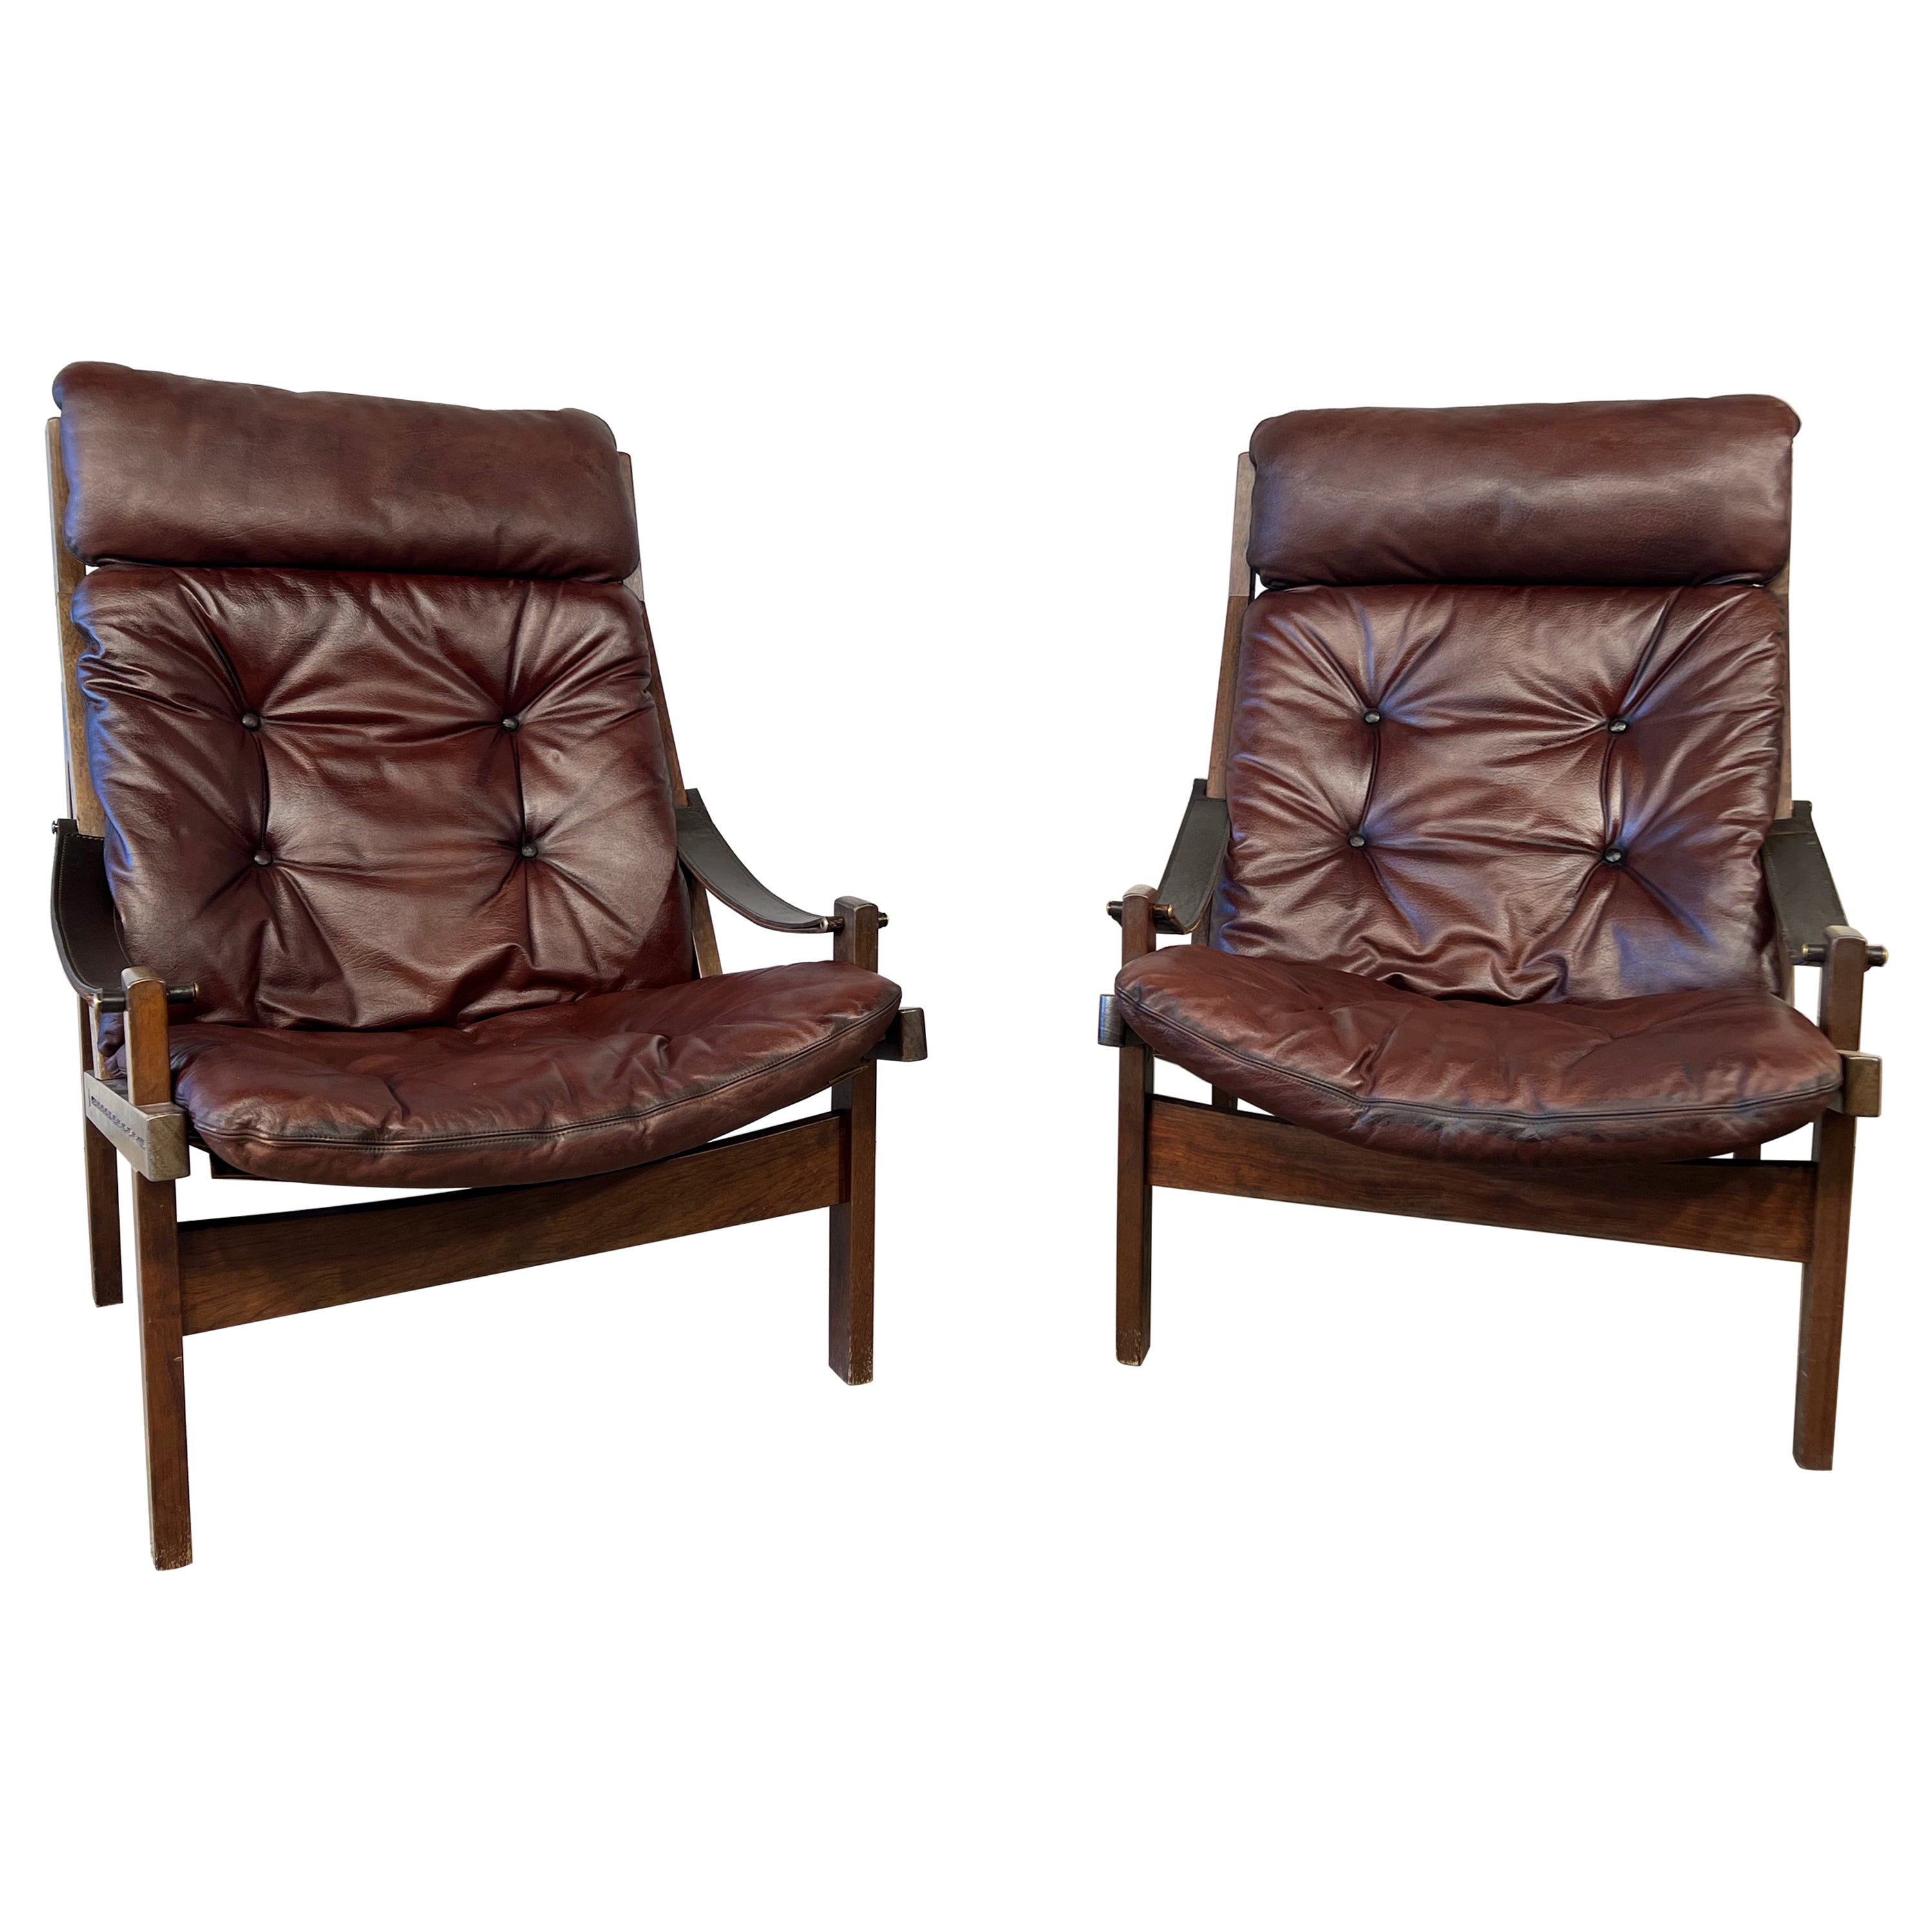 Pair of Hunter High-Back Lounge Chairs by Torbjørn Afdal for Bruksbo #526 For Sale